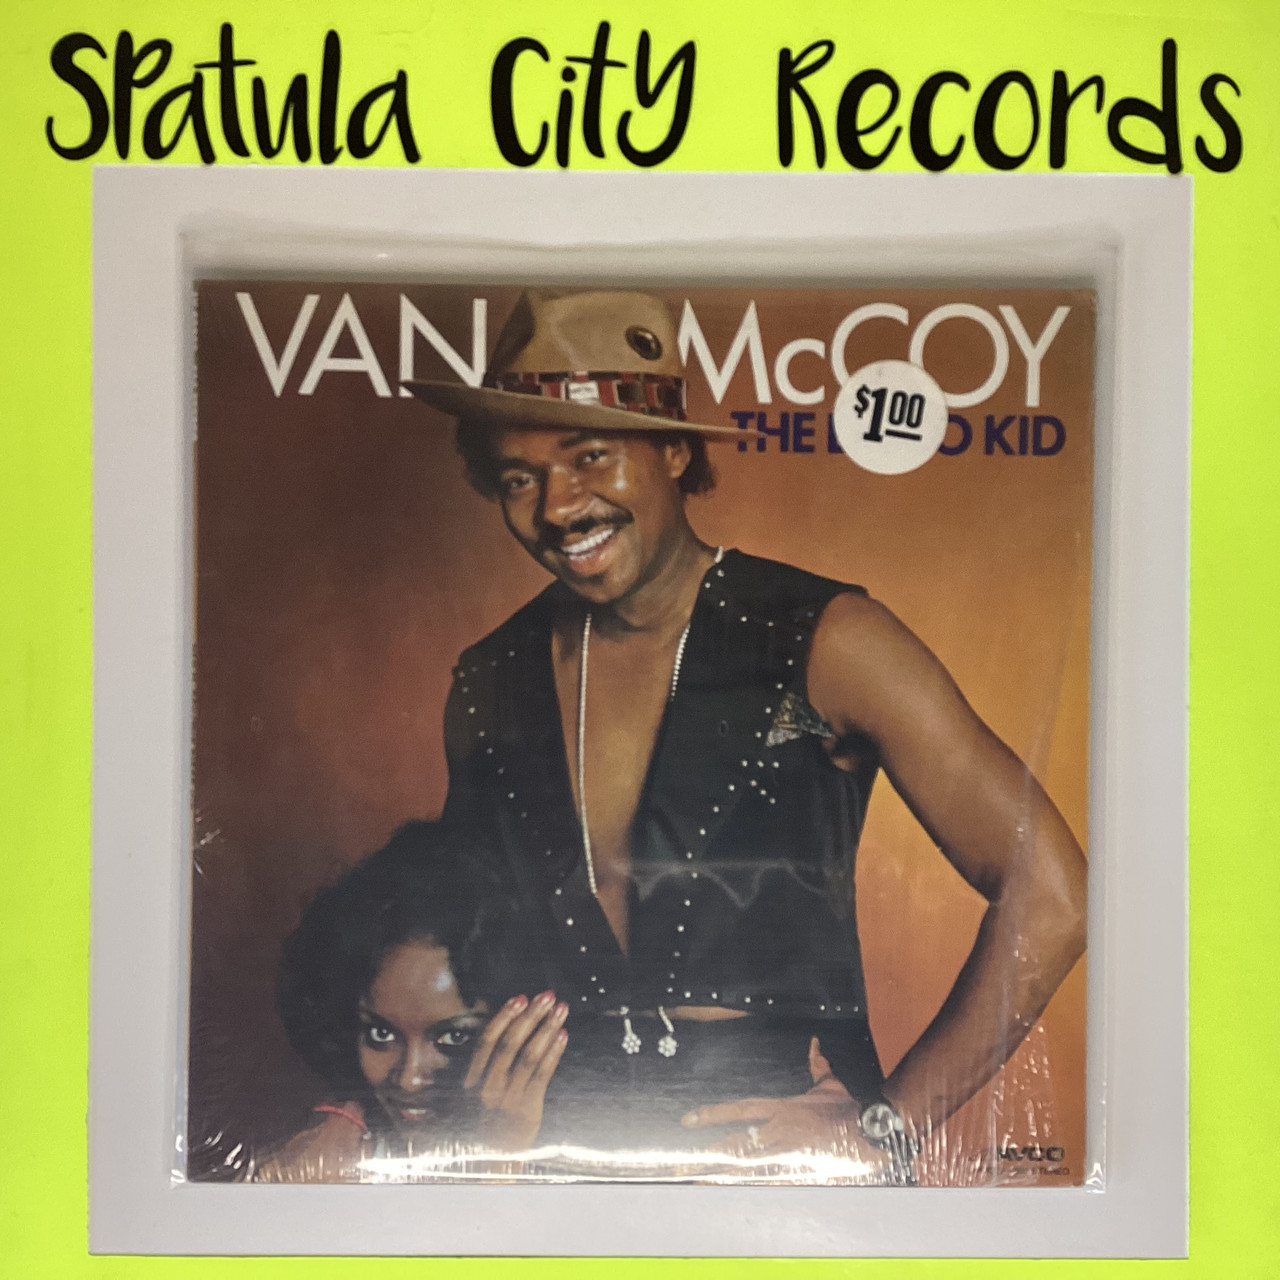 Van McCoy - The Disco Kid - vinyl record LP